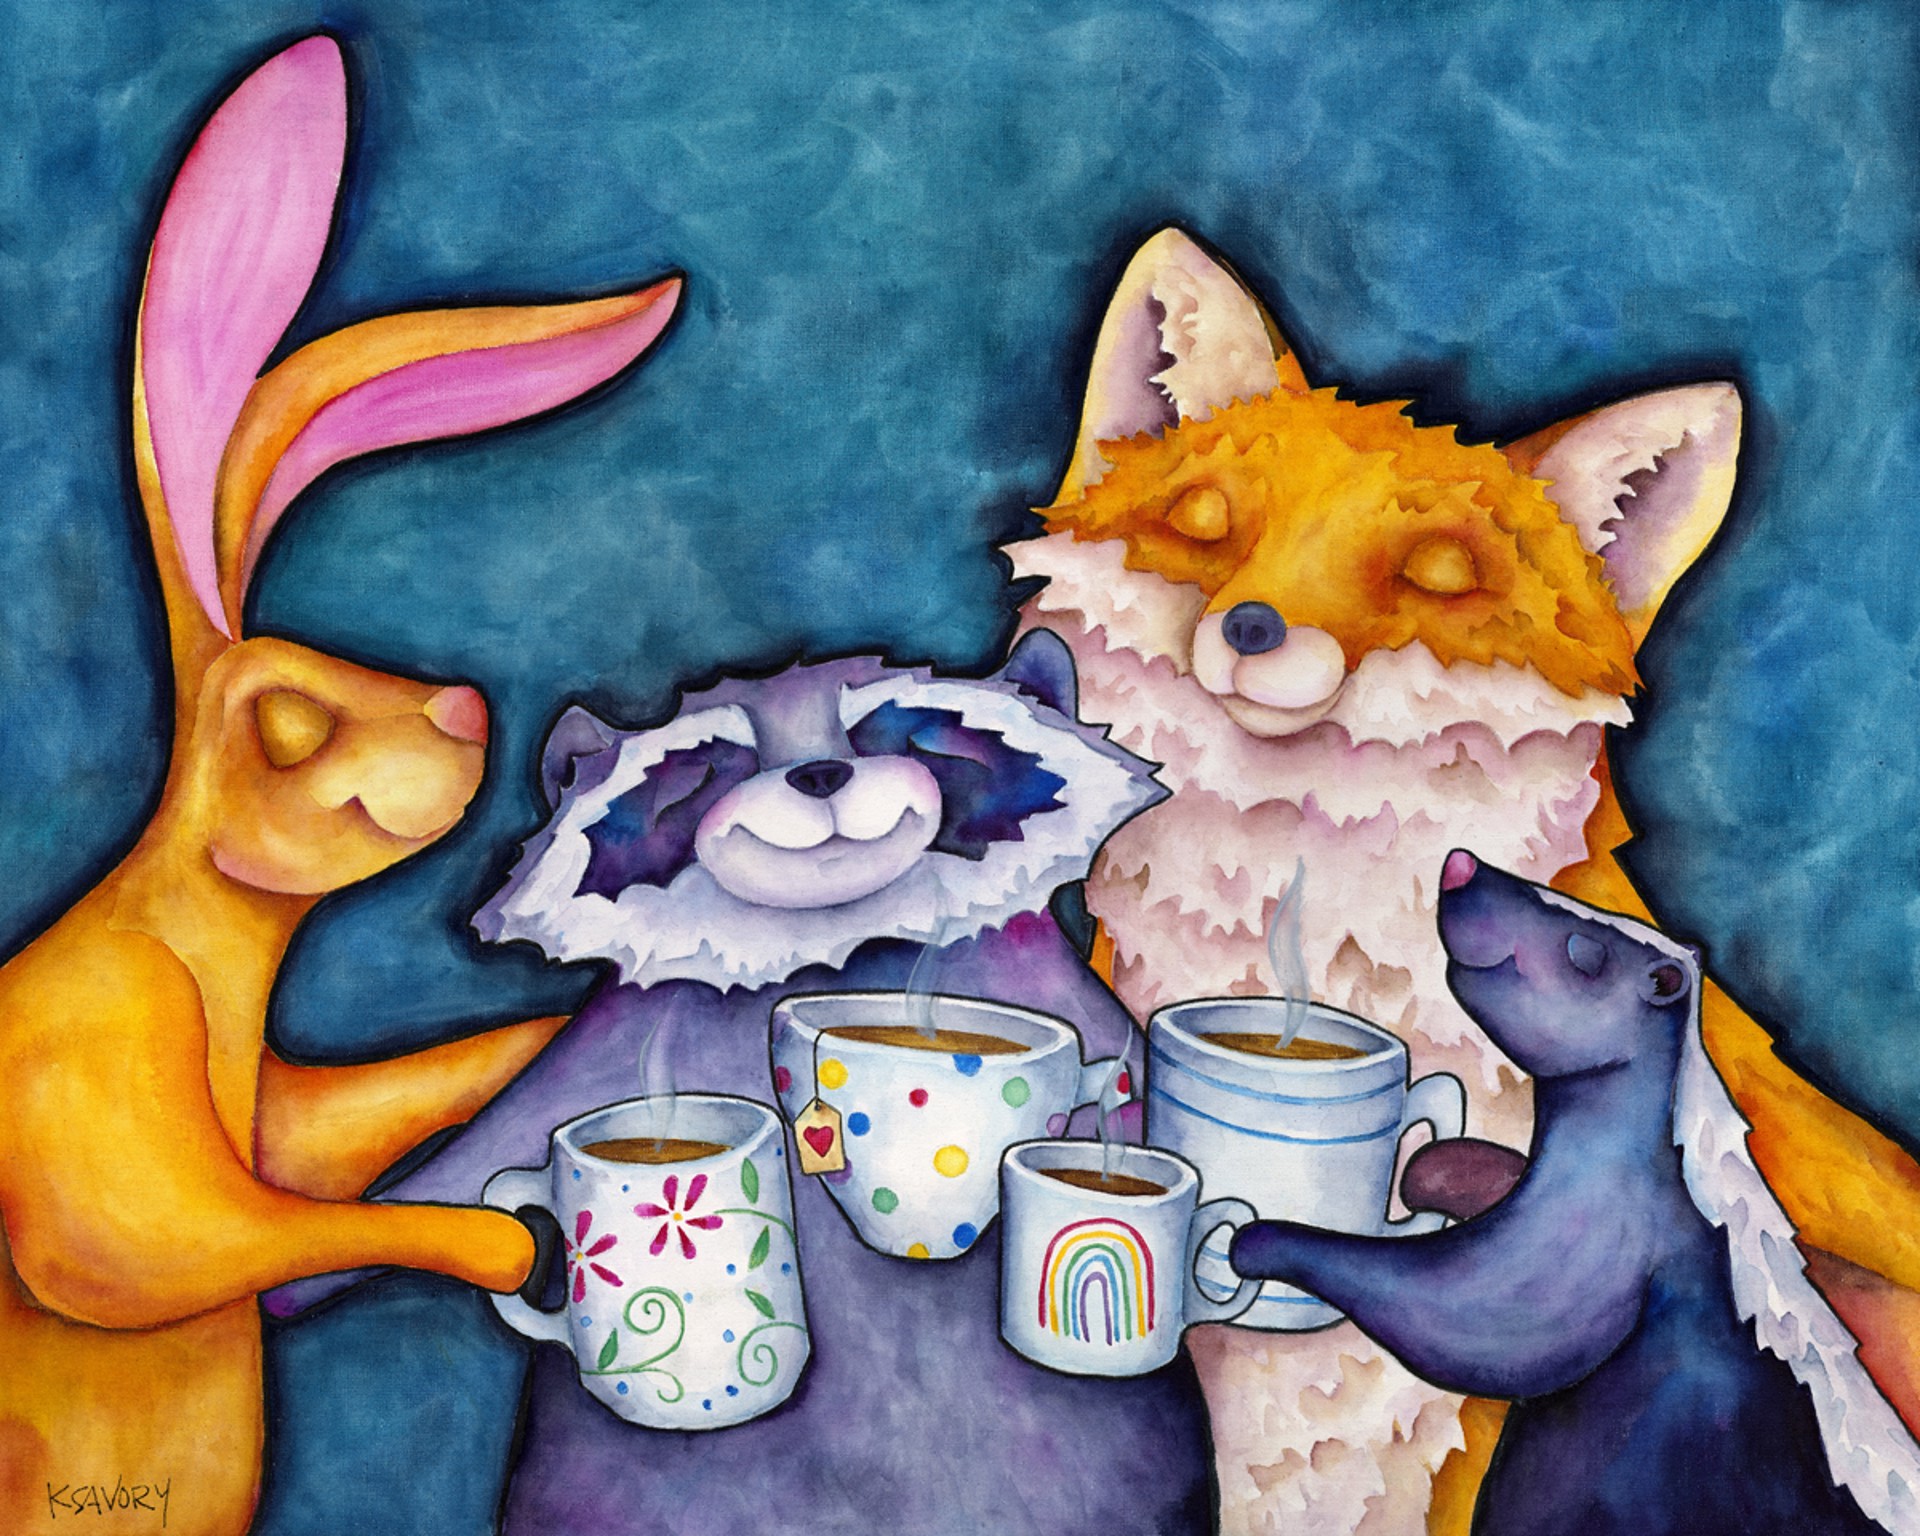 Four Cups of Tea by Karen Savory